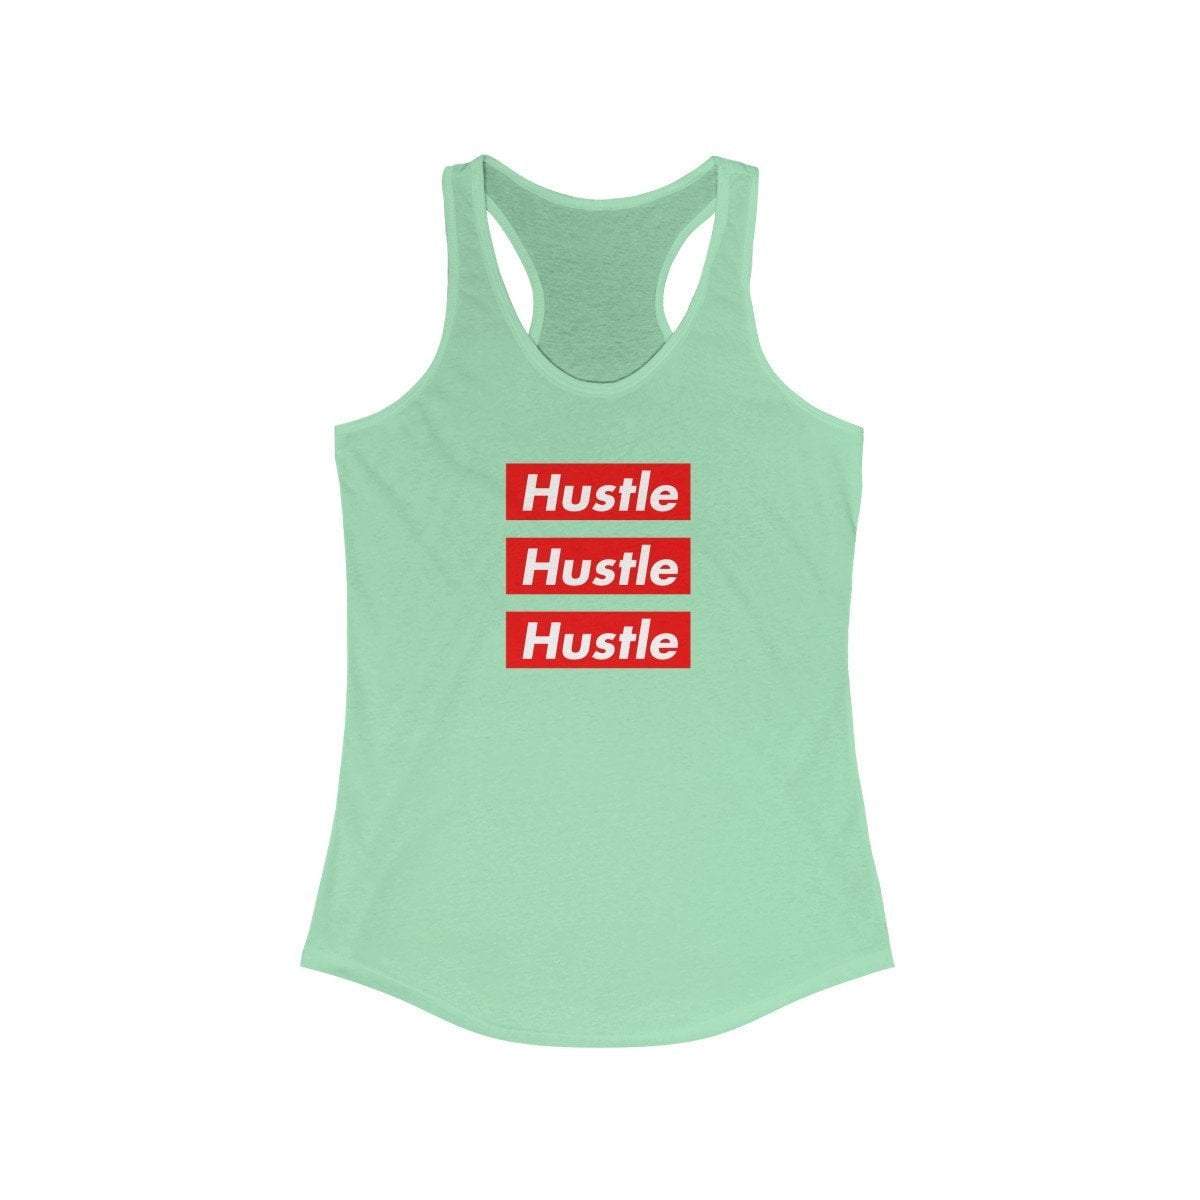 Plumskum Clothing > Women's Clothing > Tops & Tees > Tanks XS / Solid Black Plumskum Hustle Hustle Hustle Racerback Tanktop